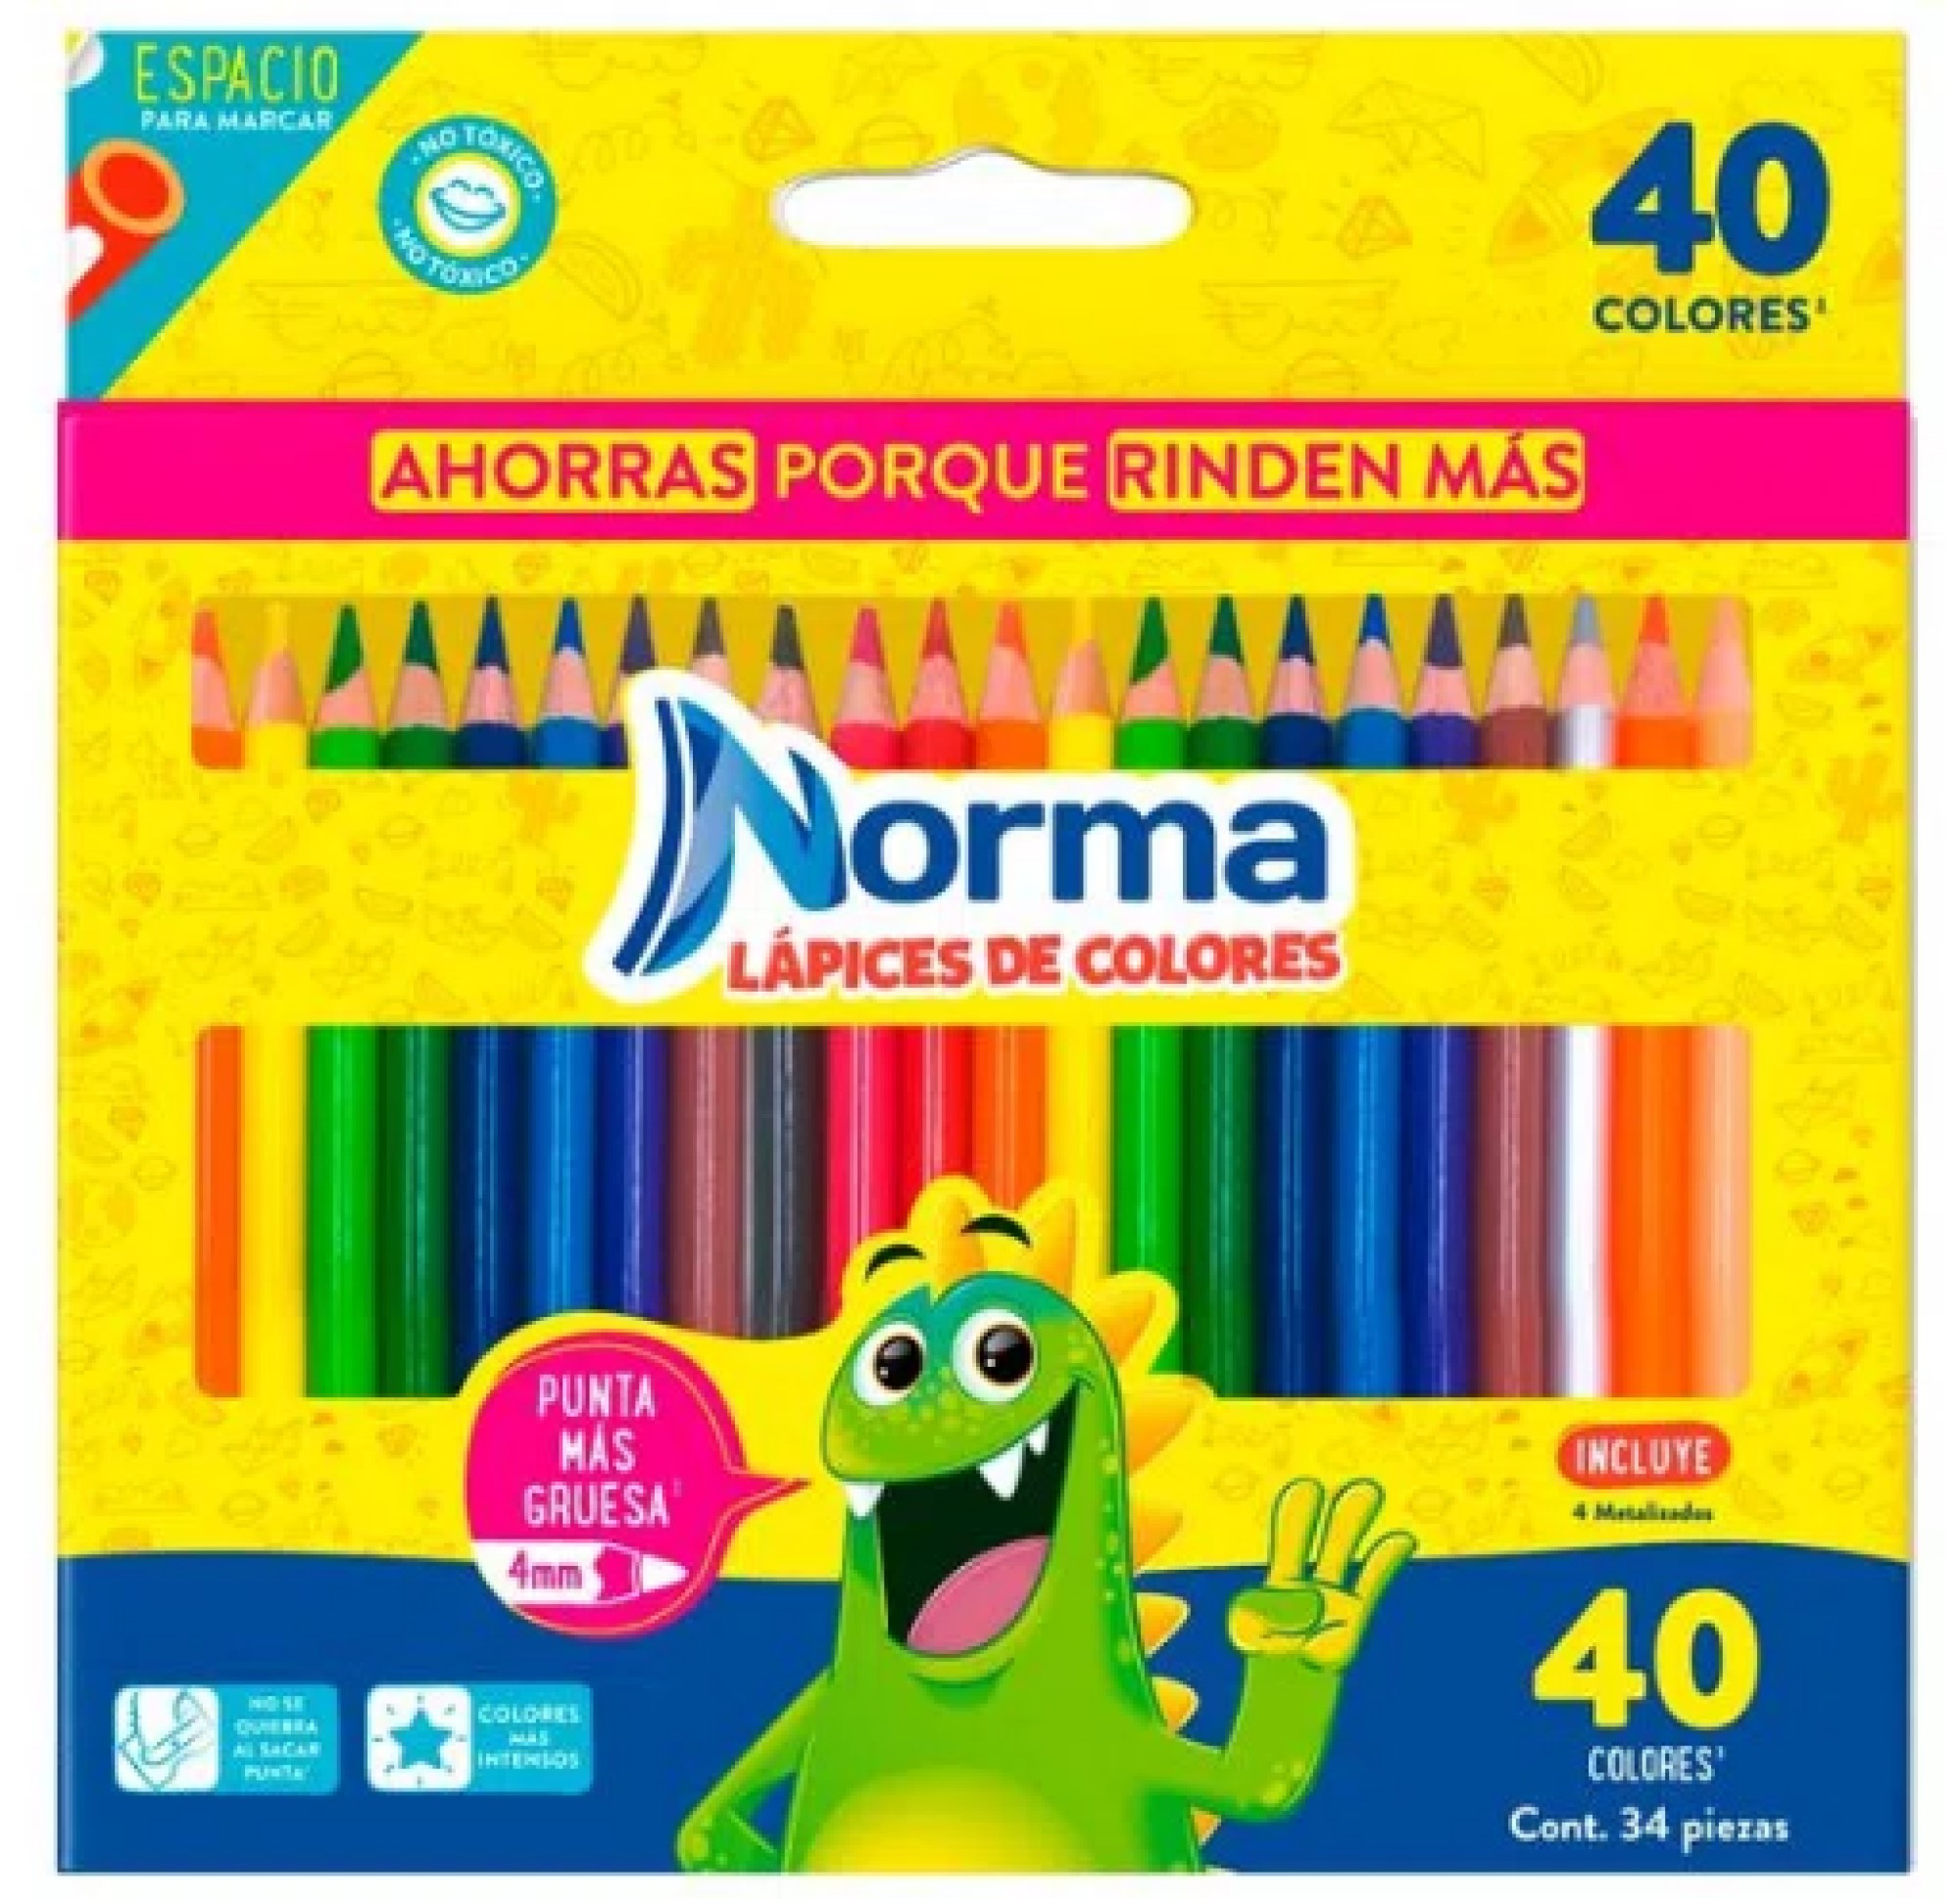 Colores Norma Premium X 15 Unidades 